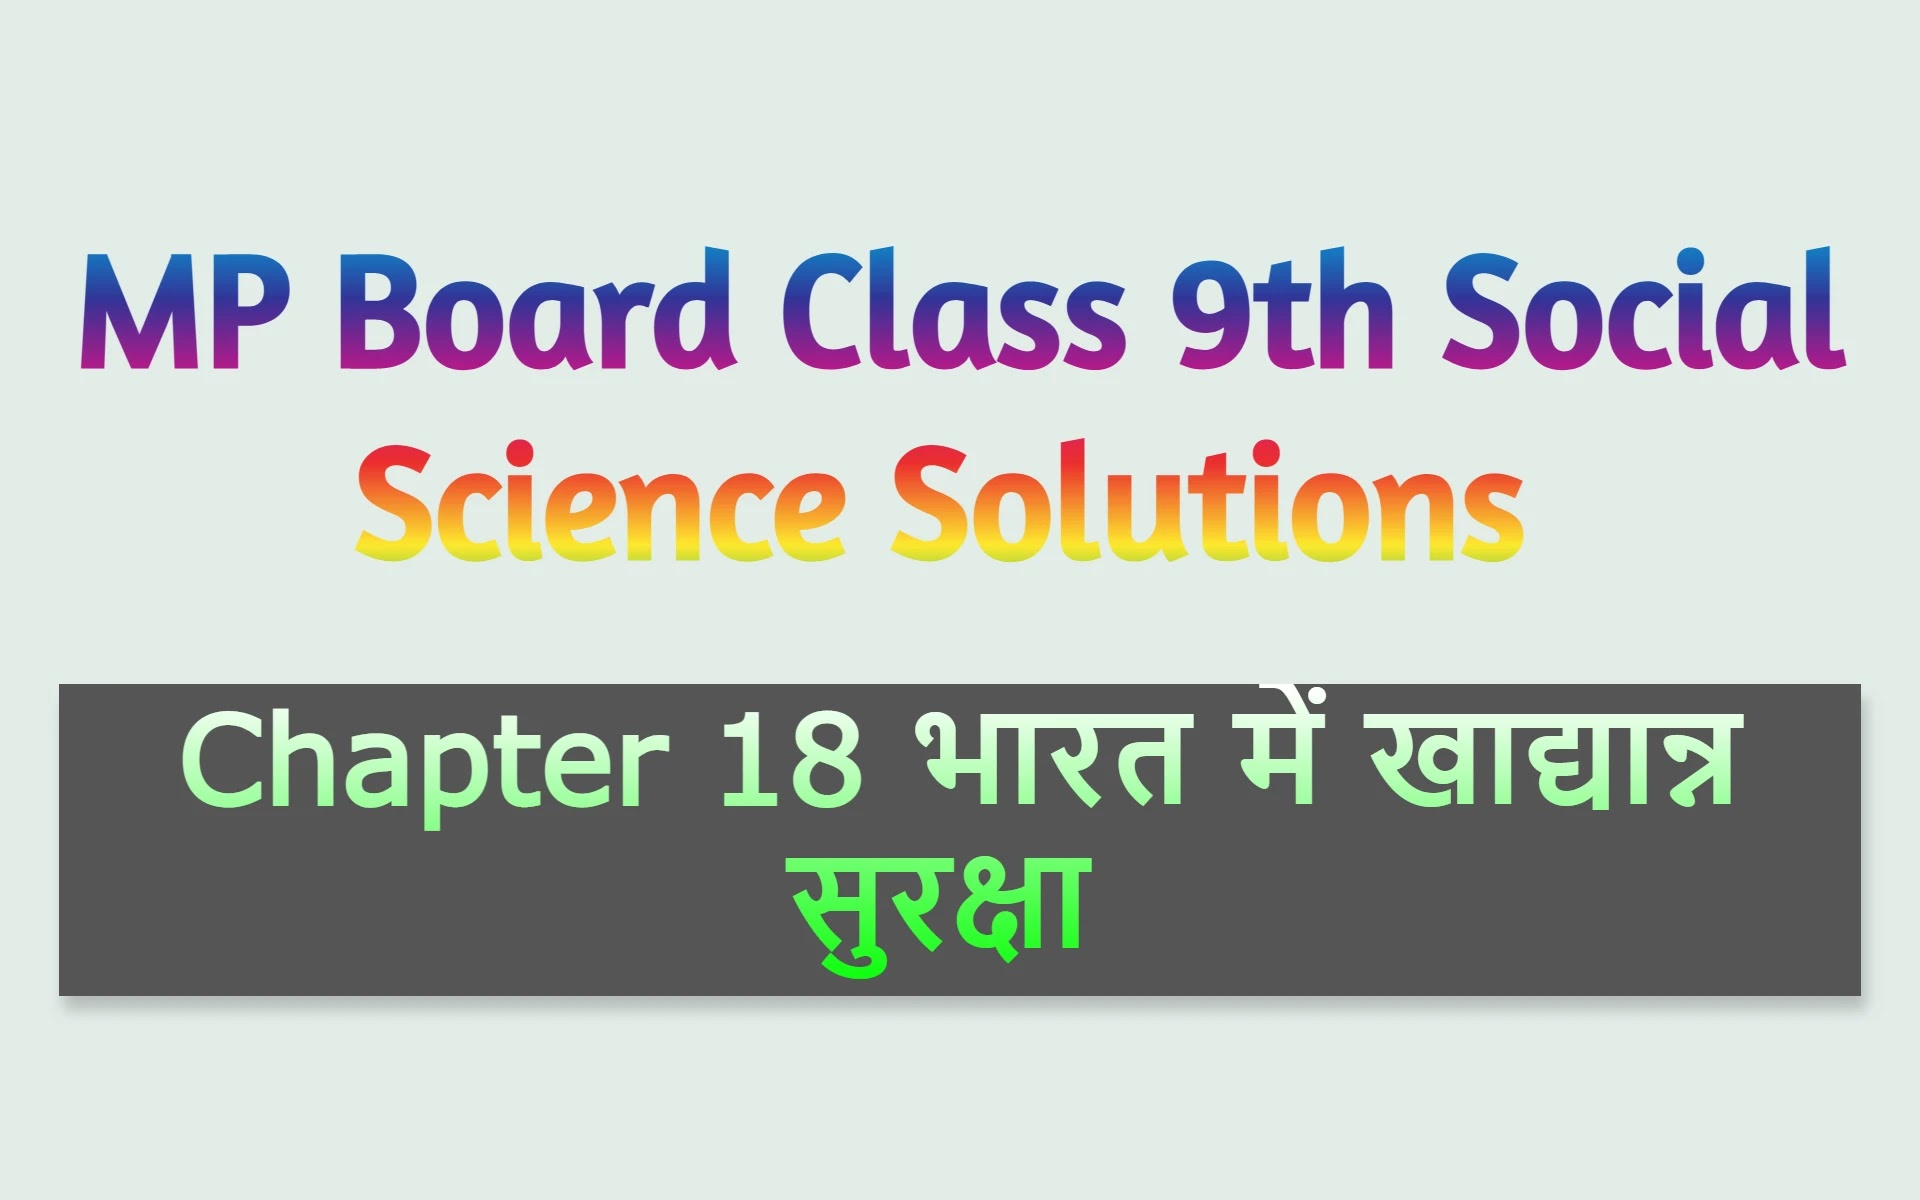 MP Board Class 9th Social Science Solutions Chapter 18 भारत में खाद्यान्न सुरक्षा – MP Board Solutions